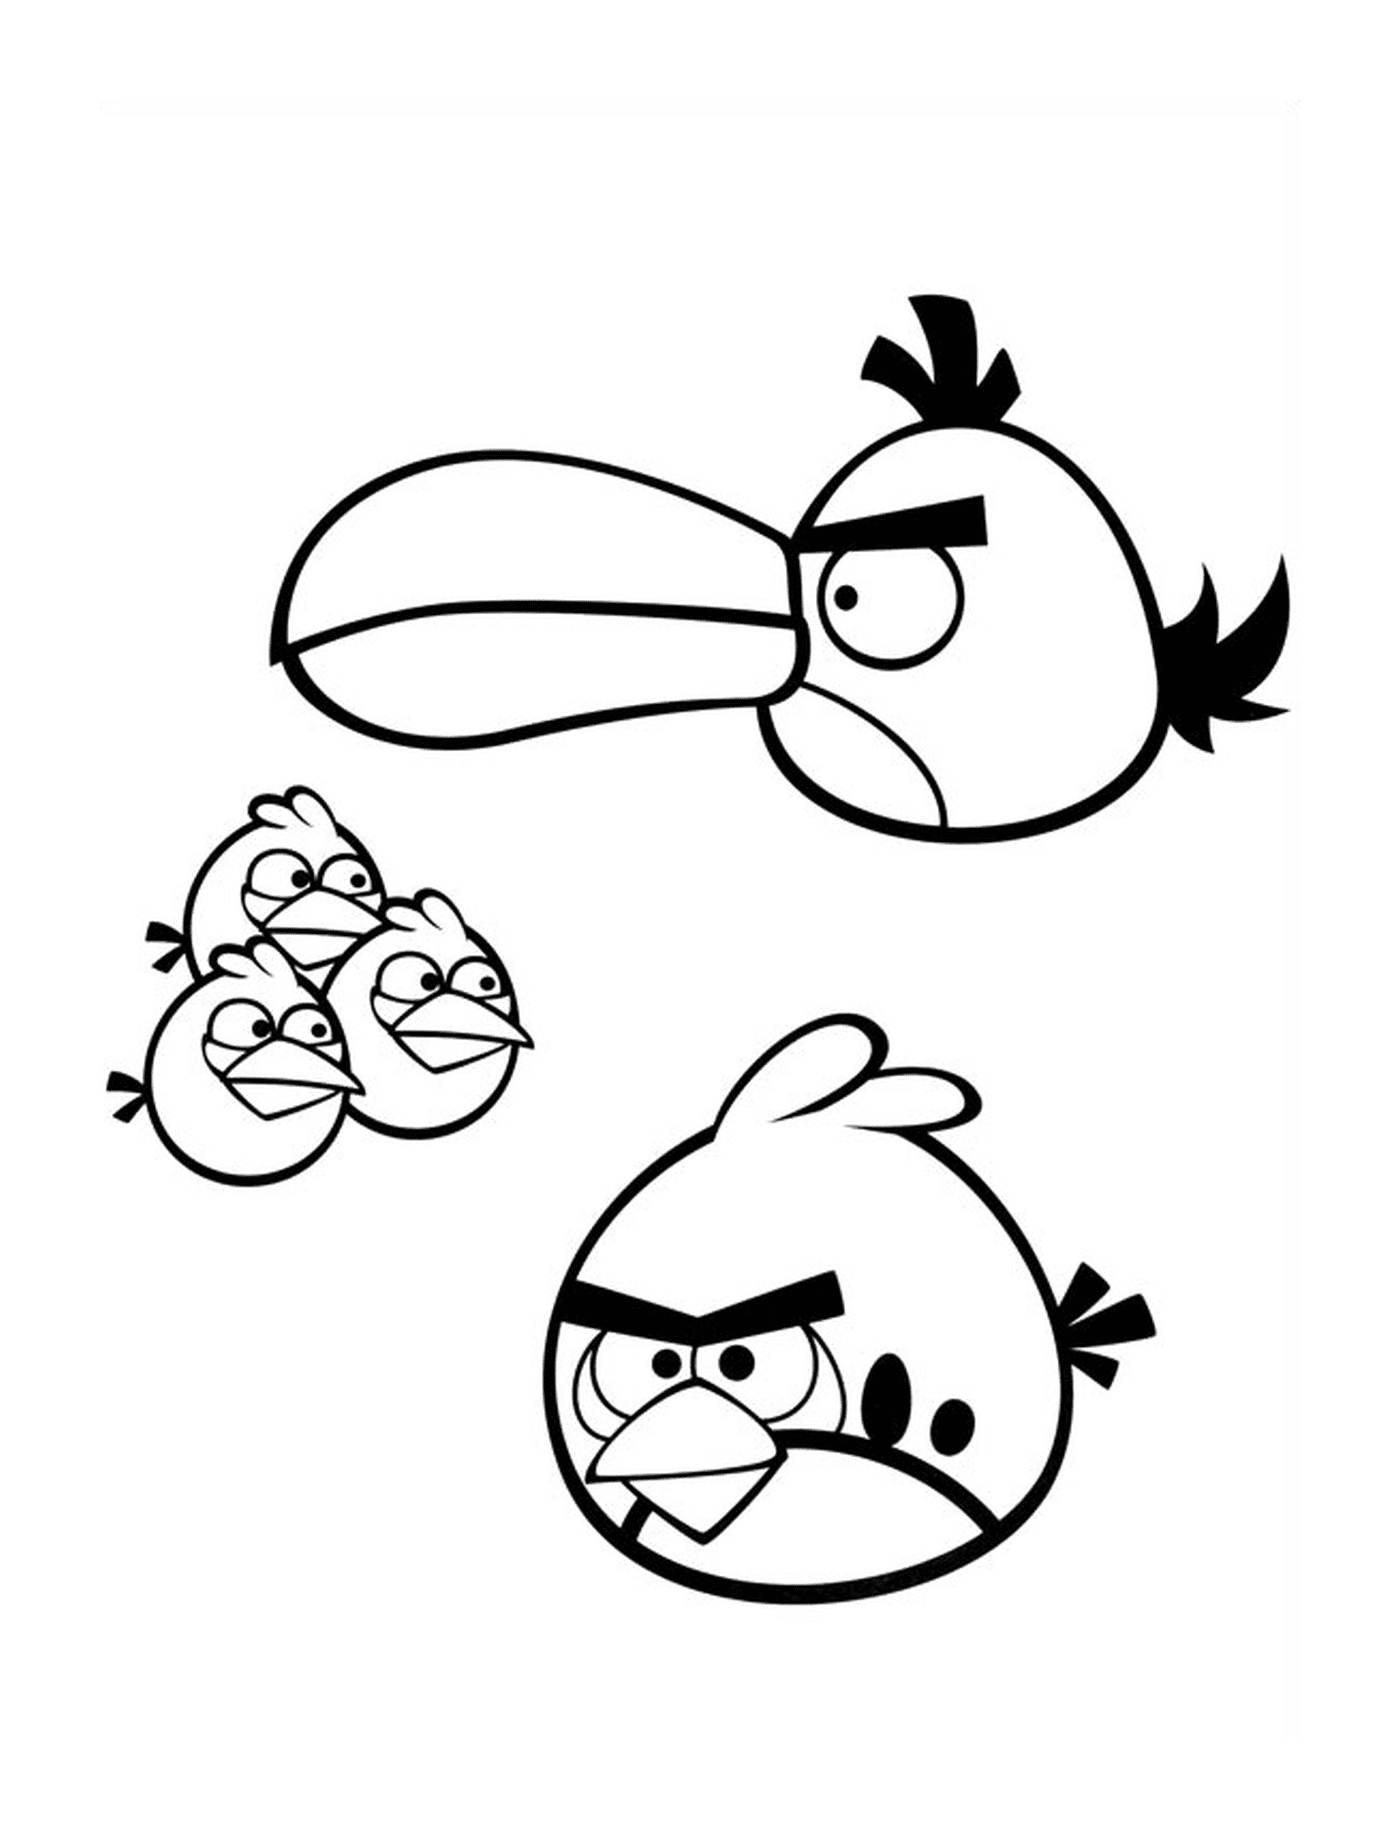  Angry Birds small and big 